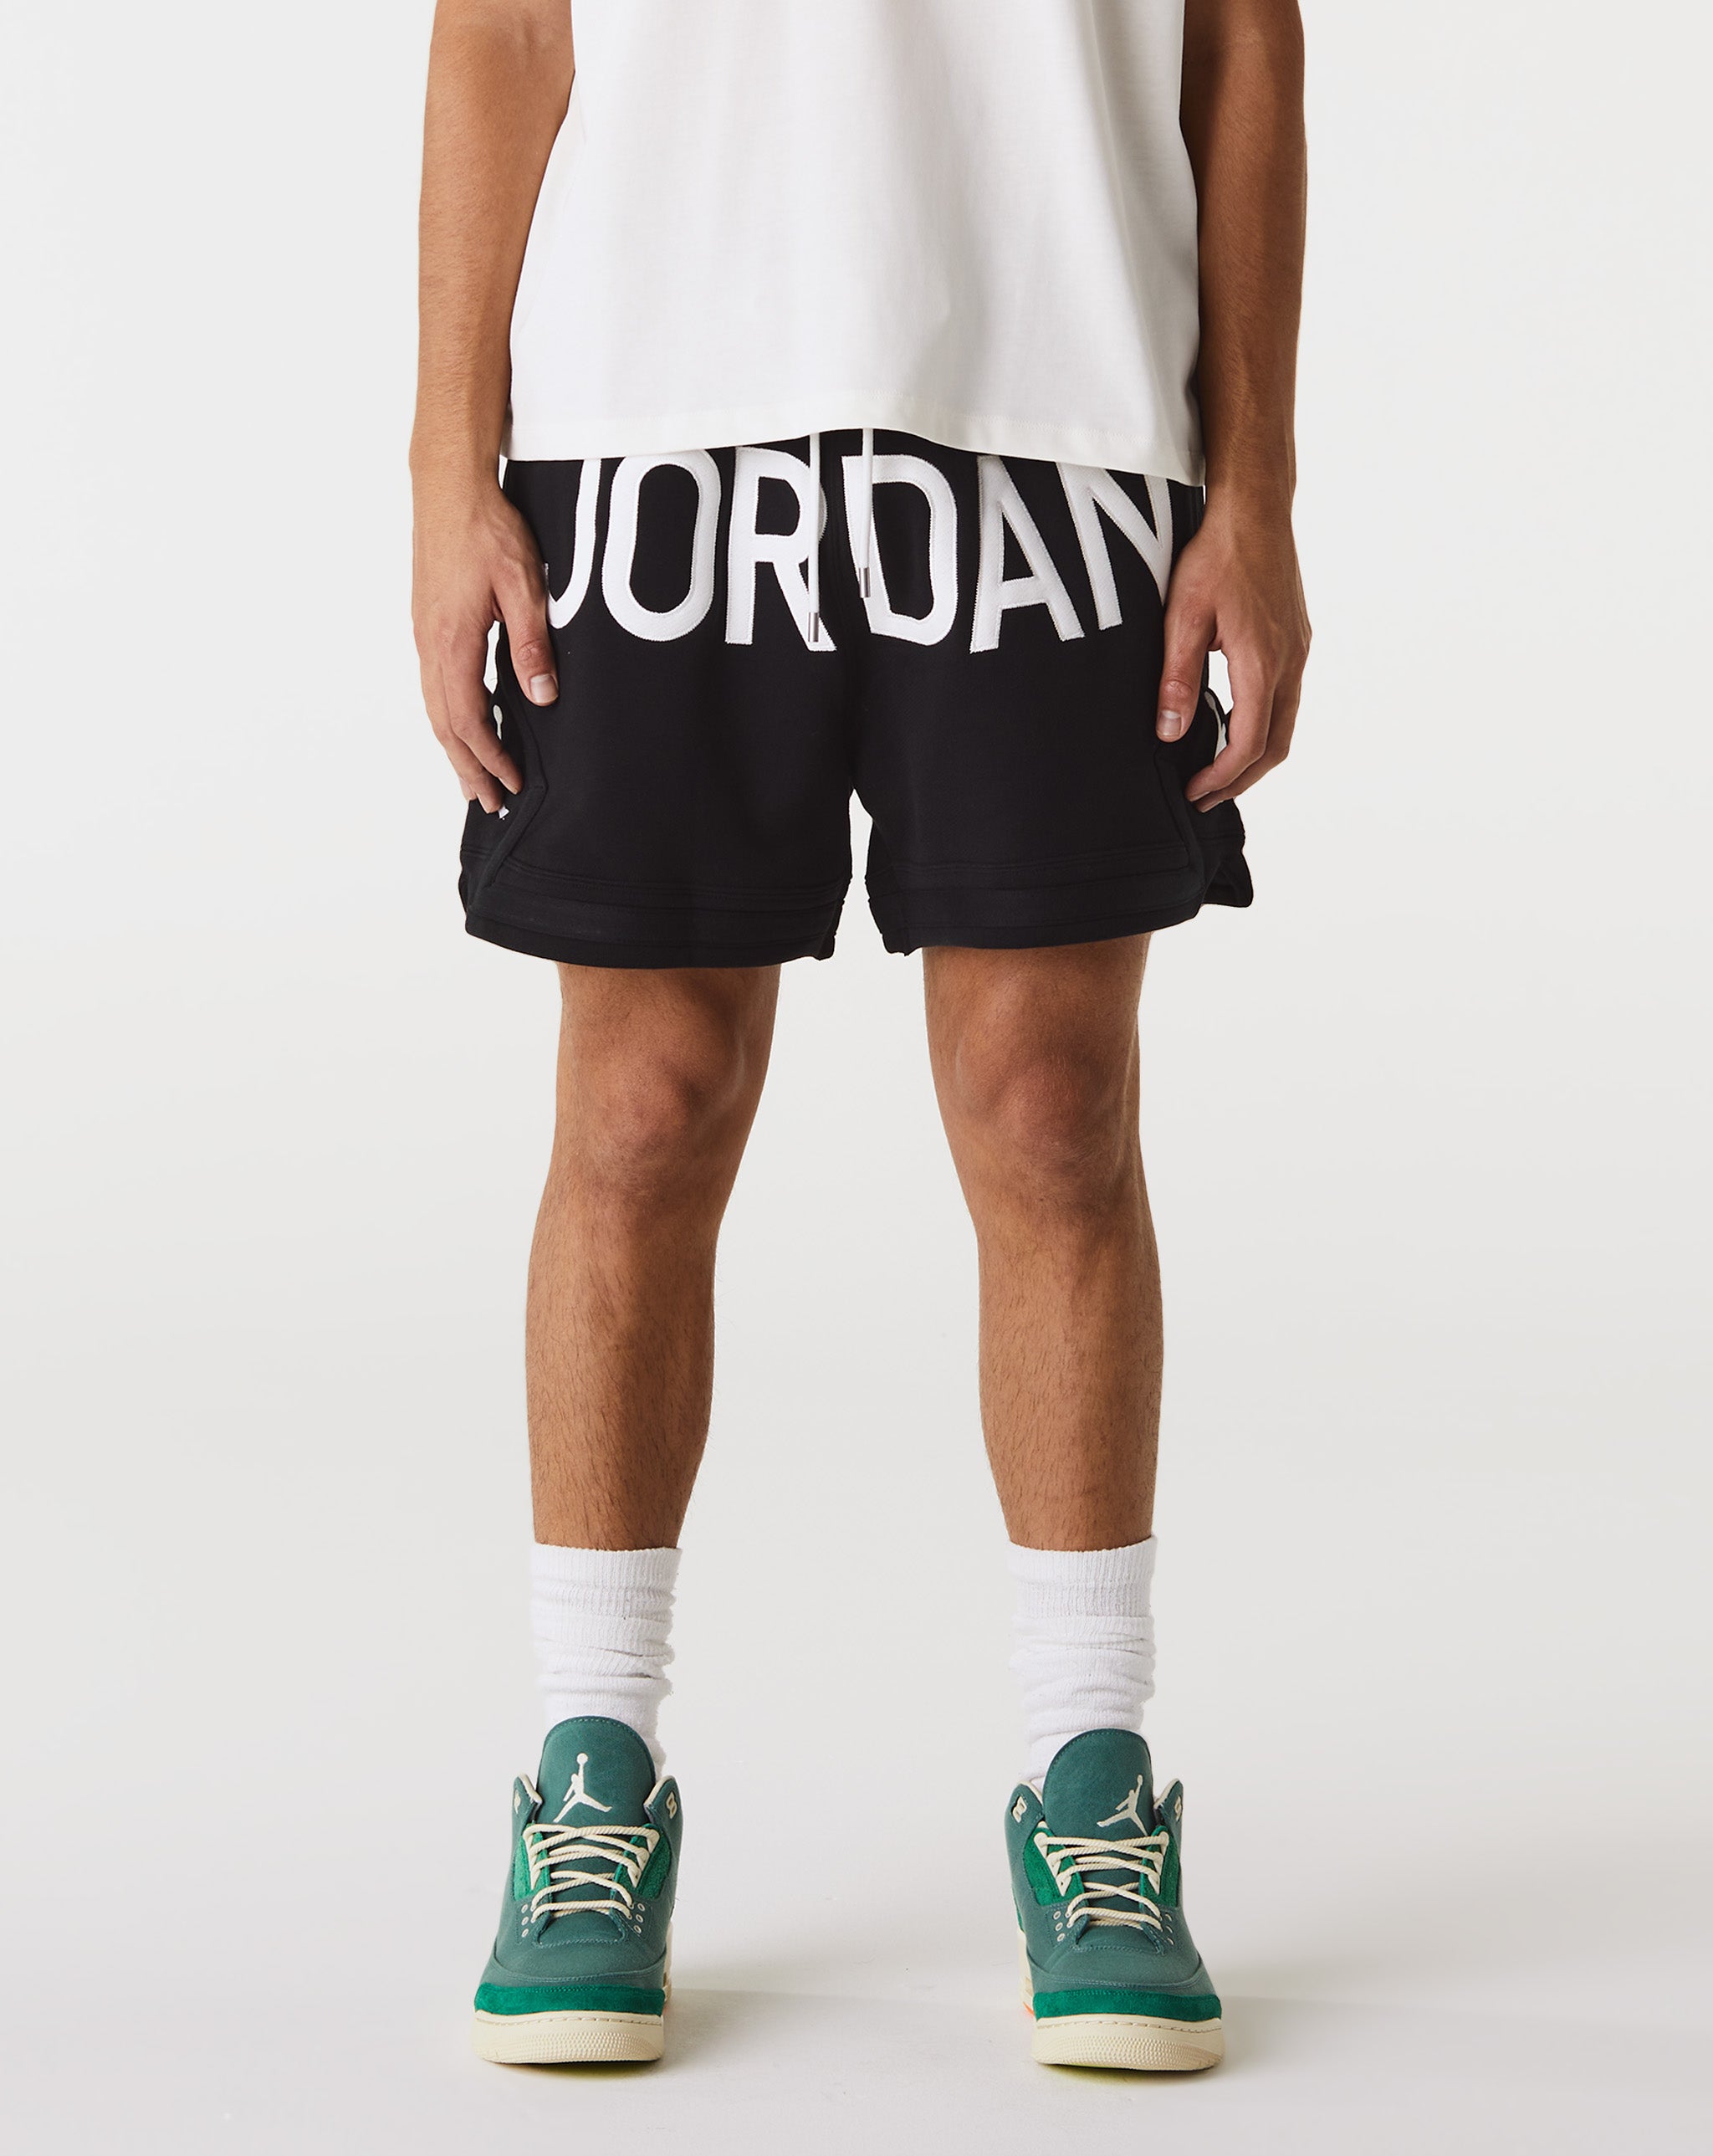 Air Jordan Nina Chanel Abney x Shorts  - Cheap Cerbe Jordan outlet